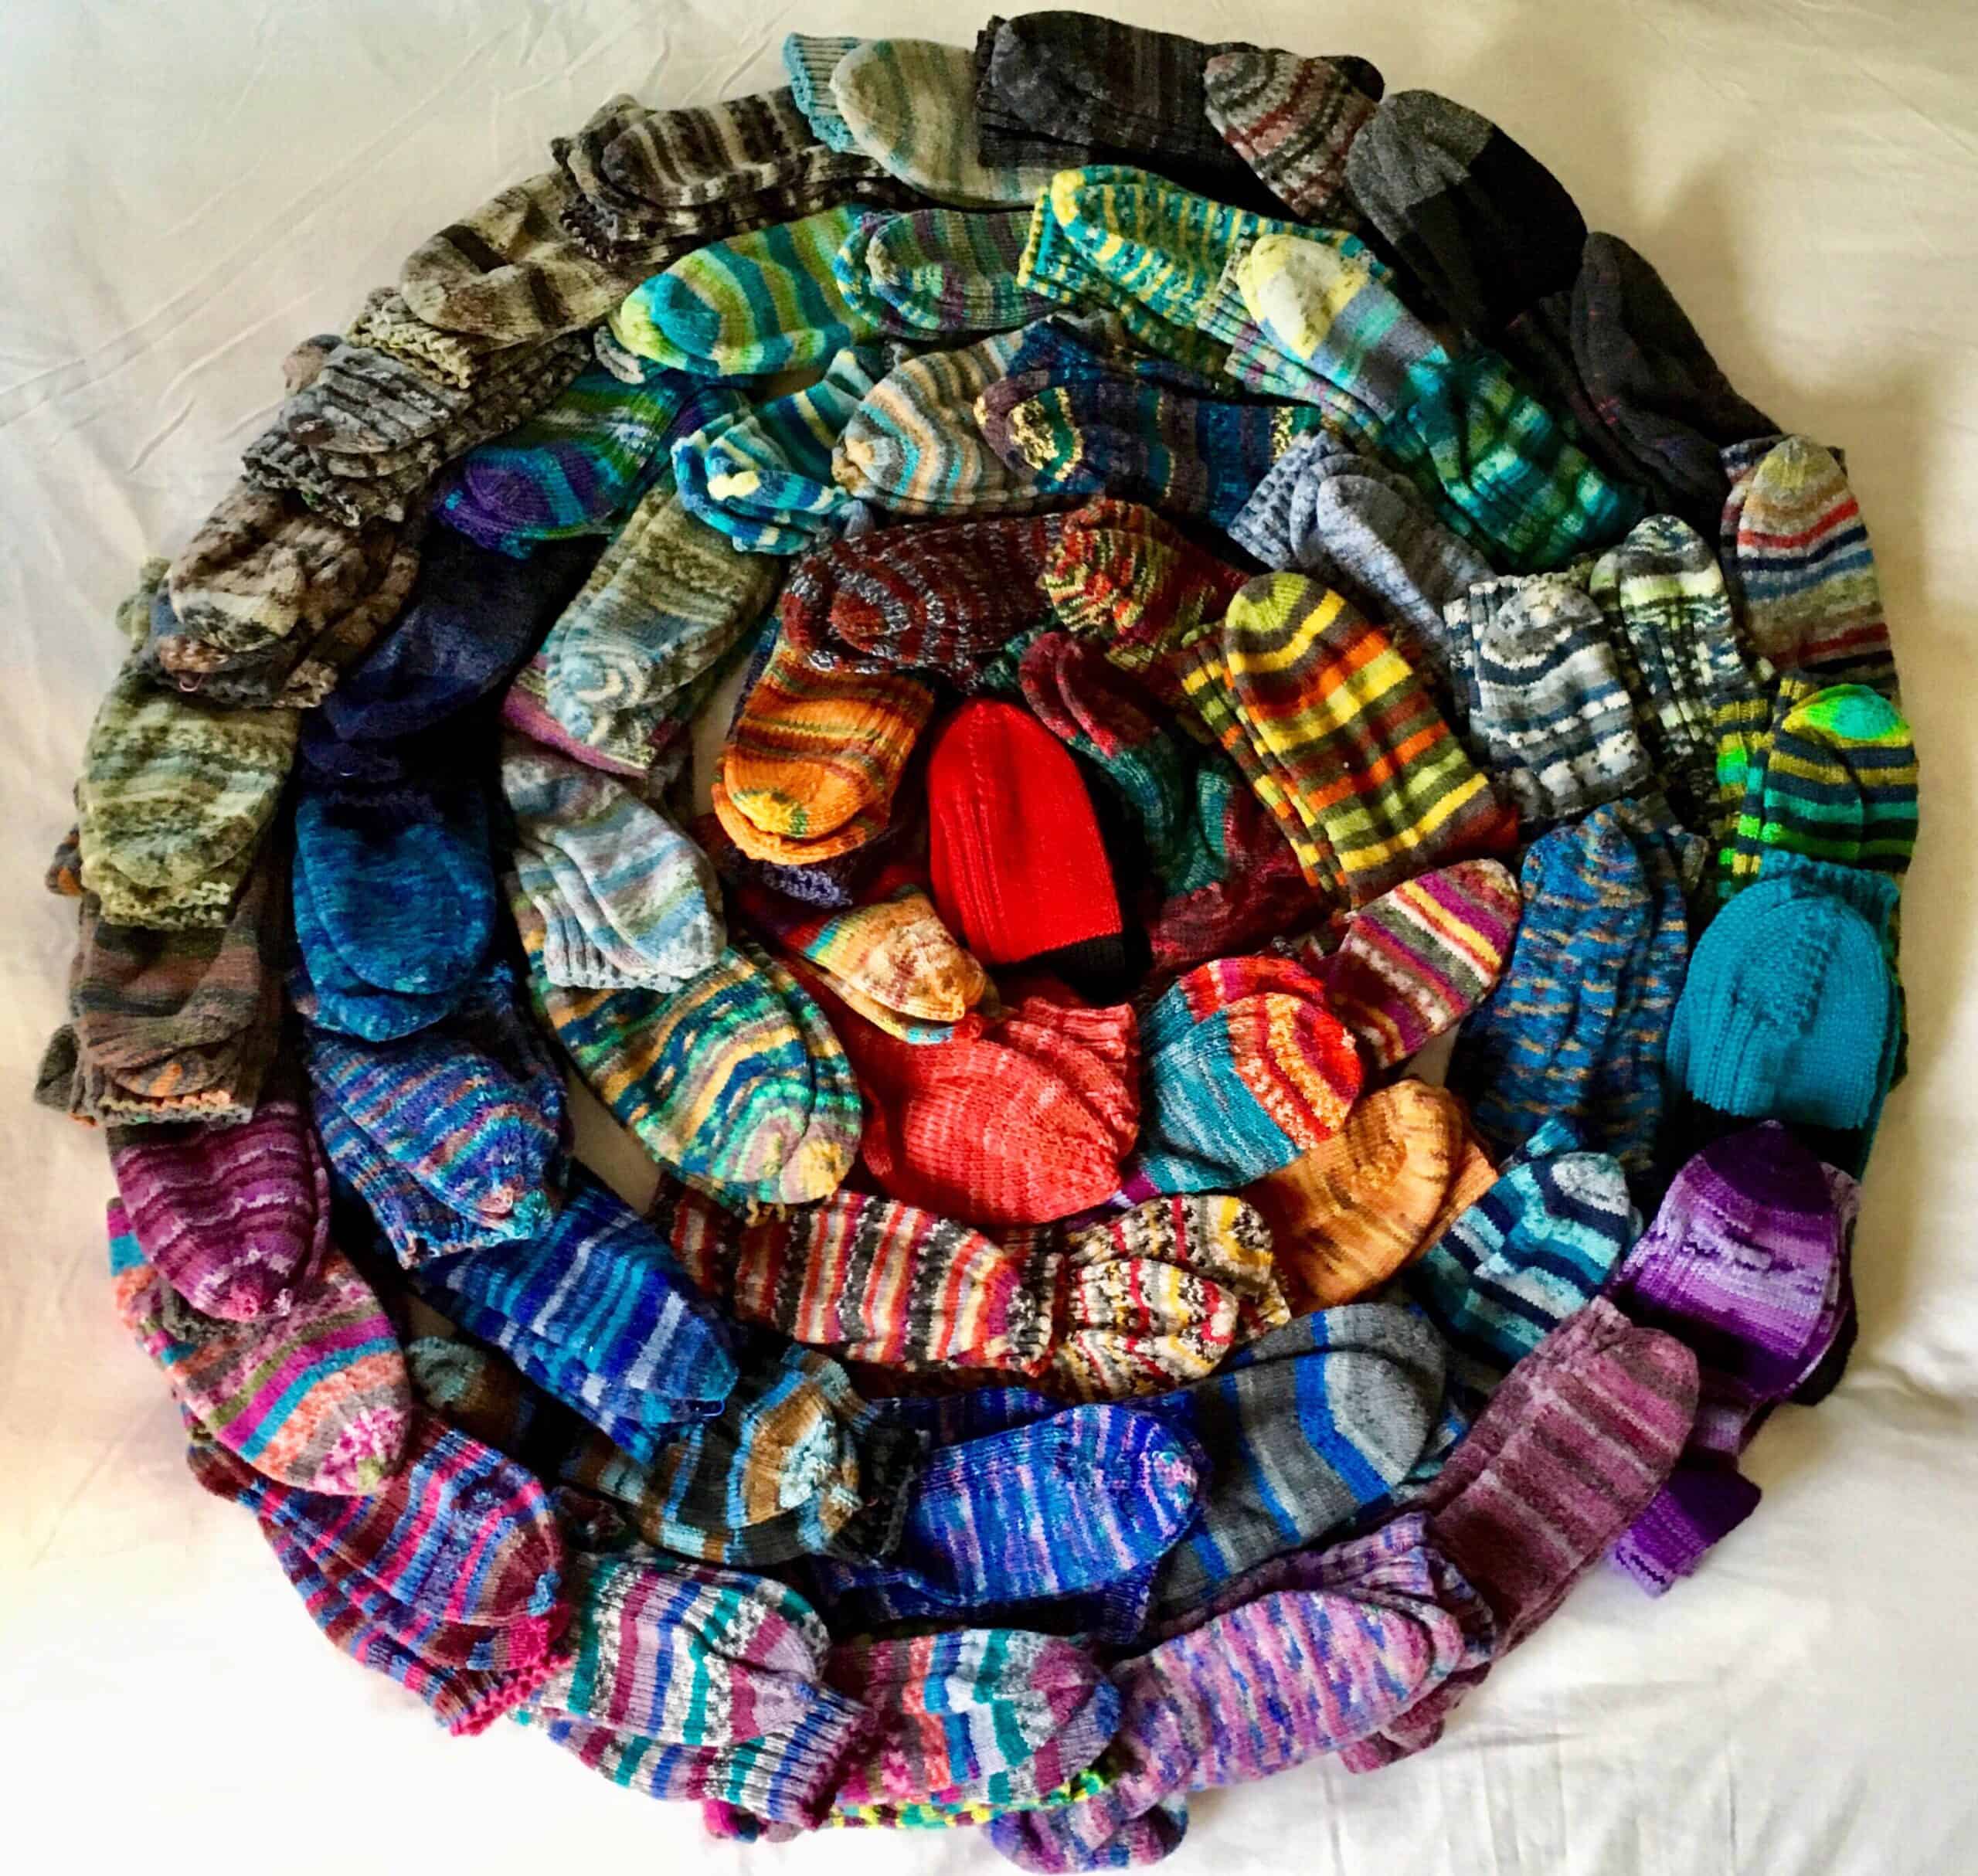 Loads of Socks in a circle